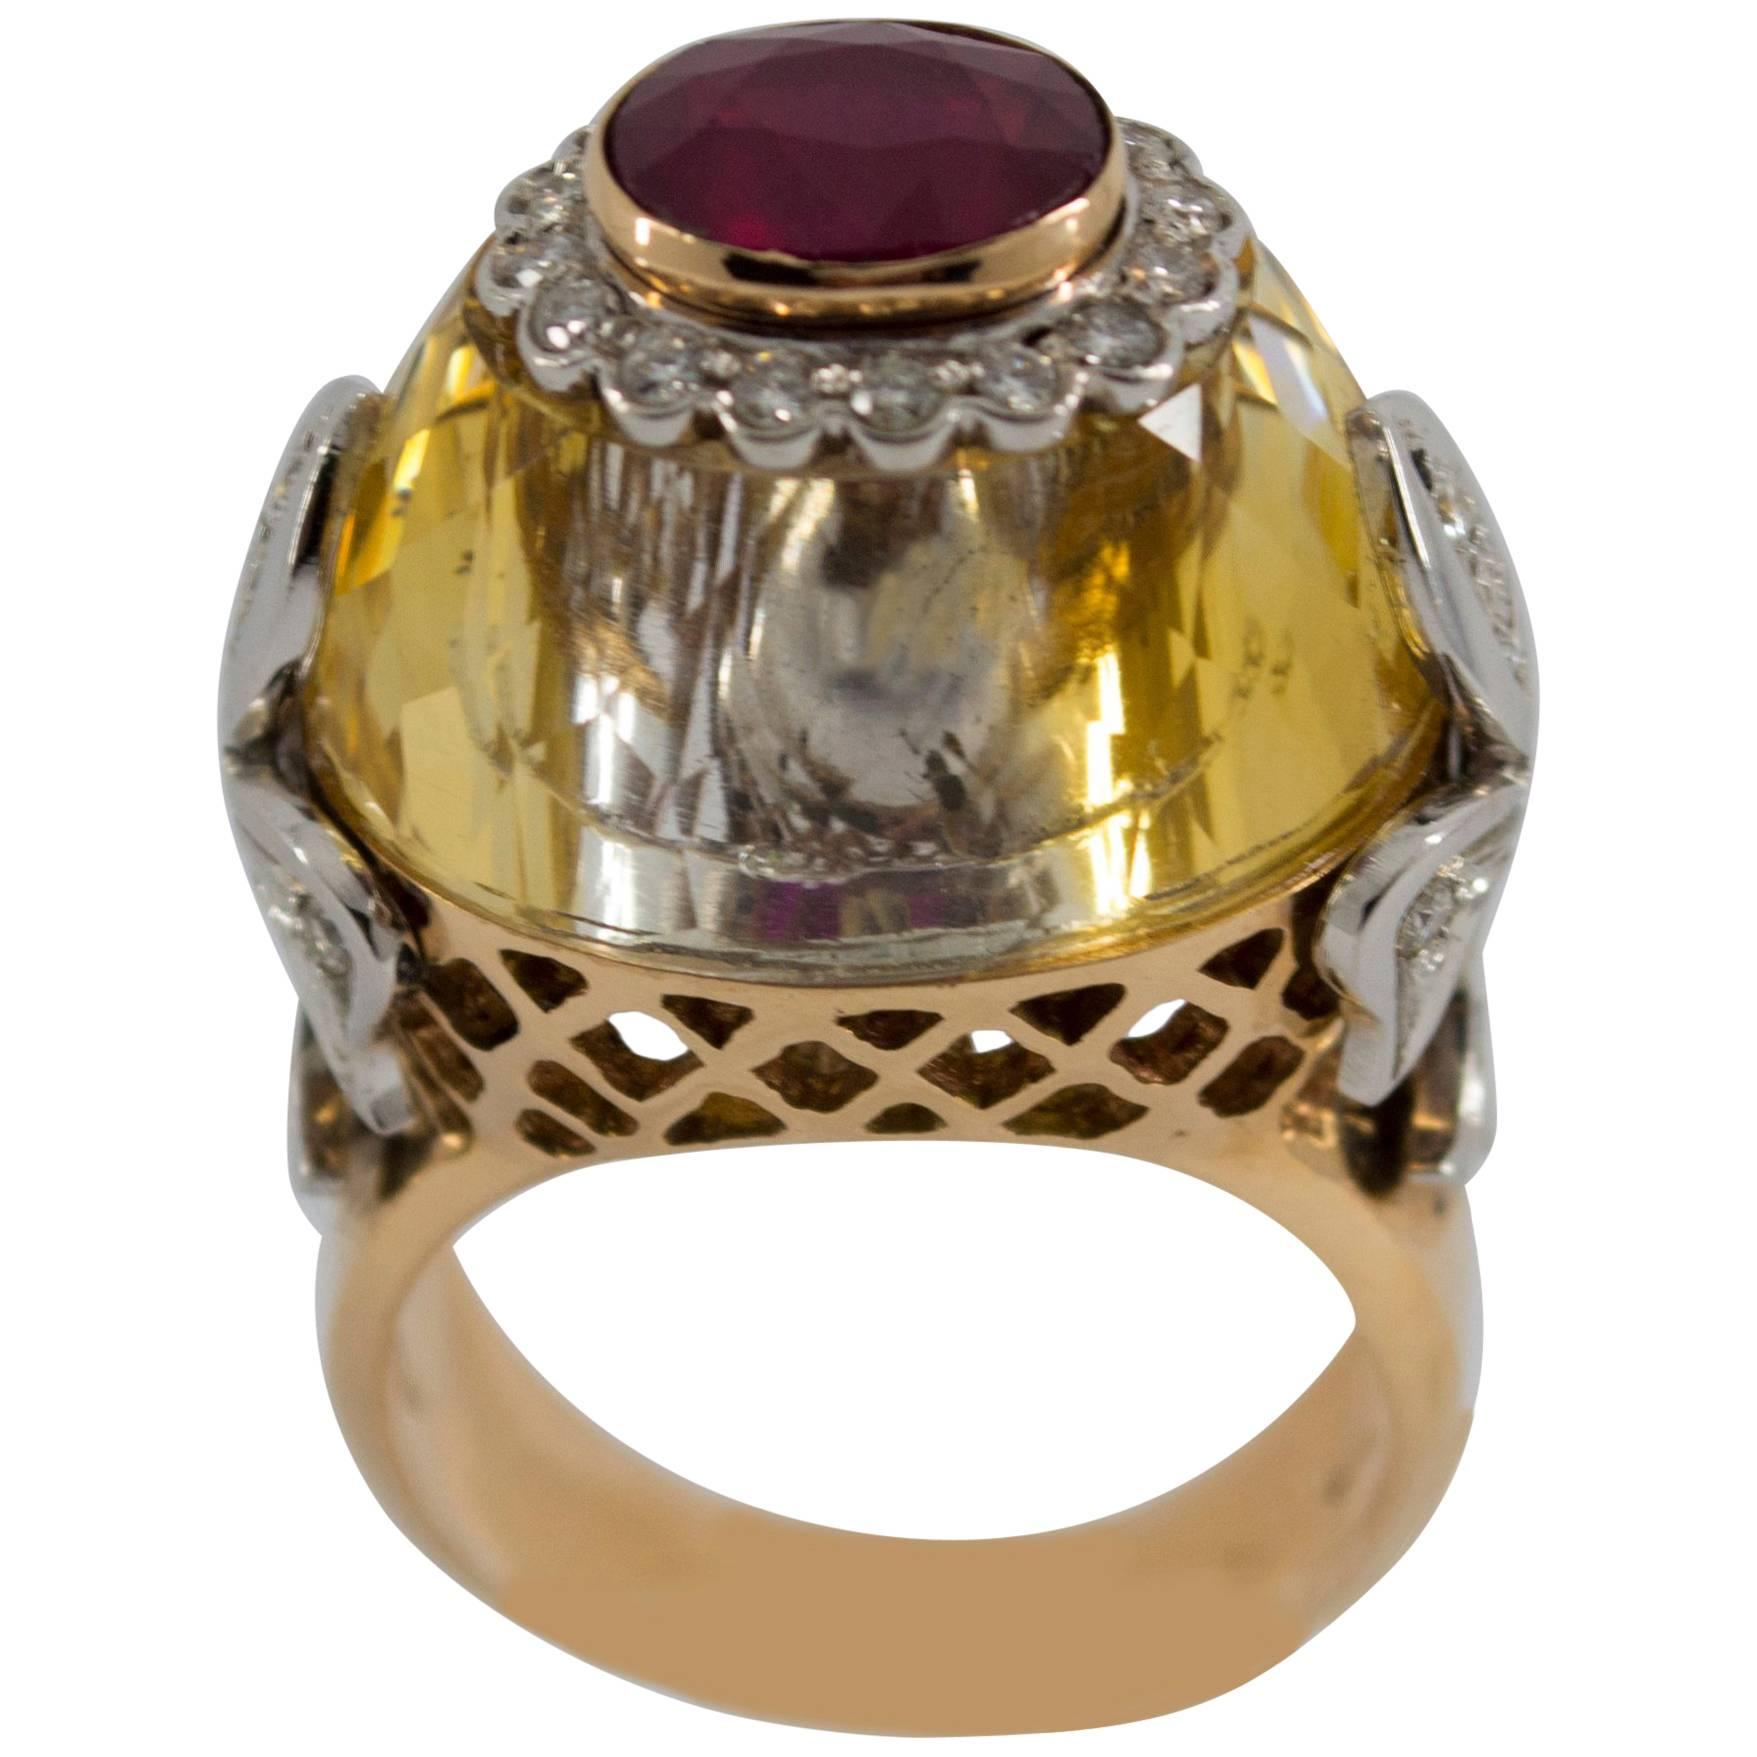 1.20 Carat Ruby Diamond Citrine Yellow Gold Cocktail Ring